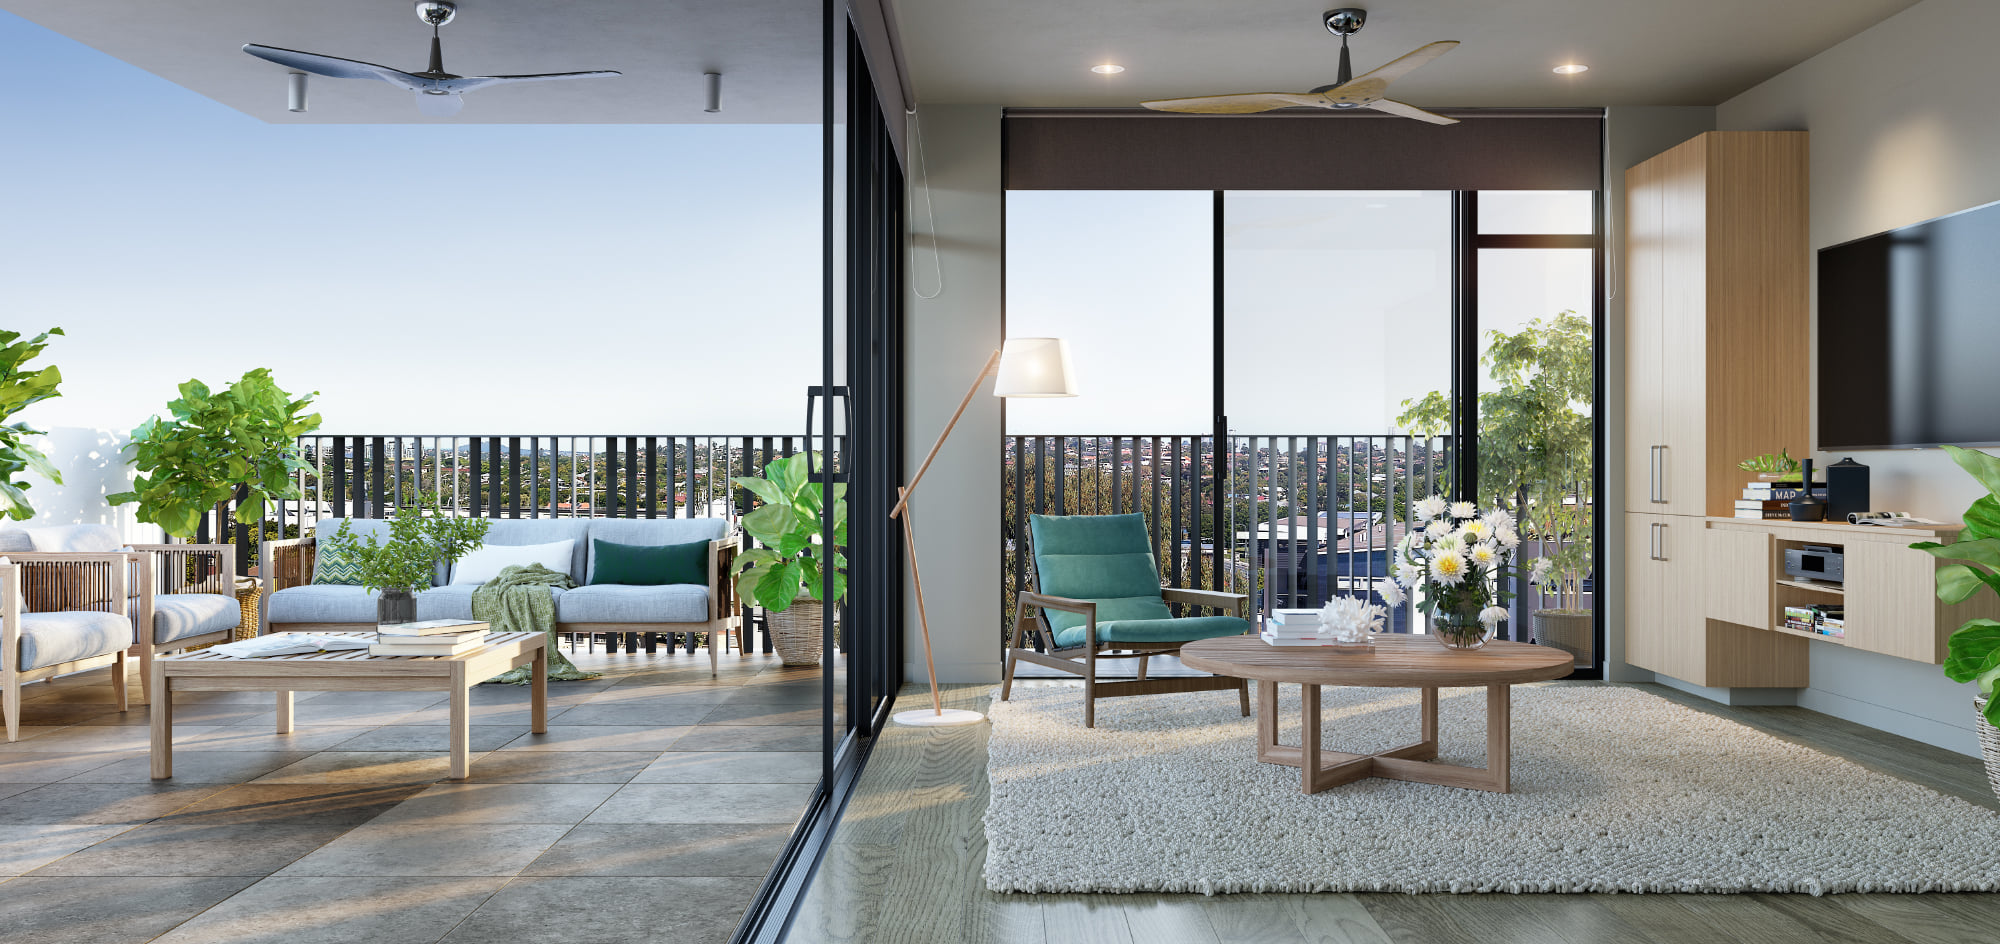 Alondra Residences Living Room and Balcony